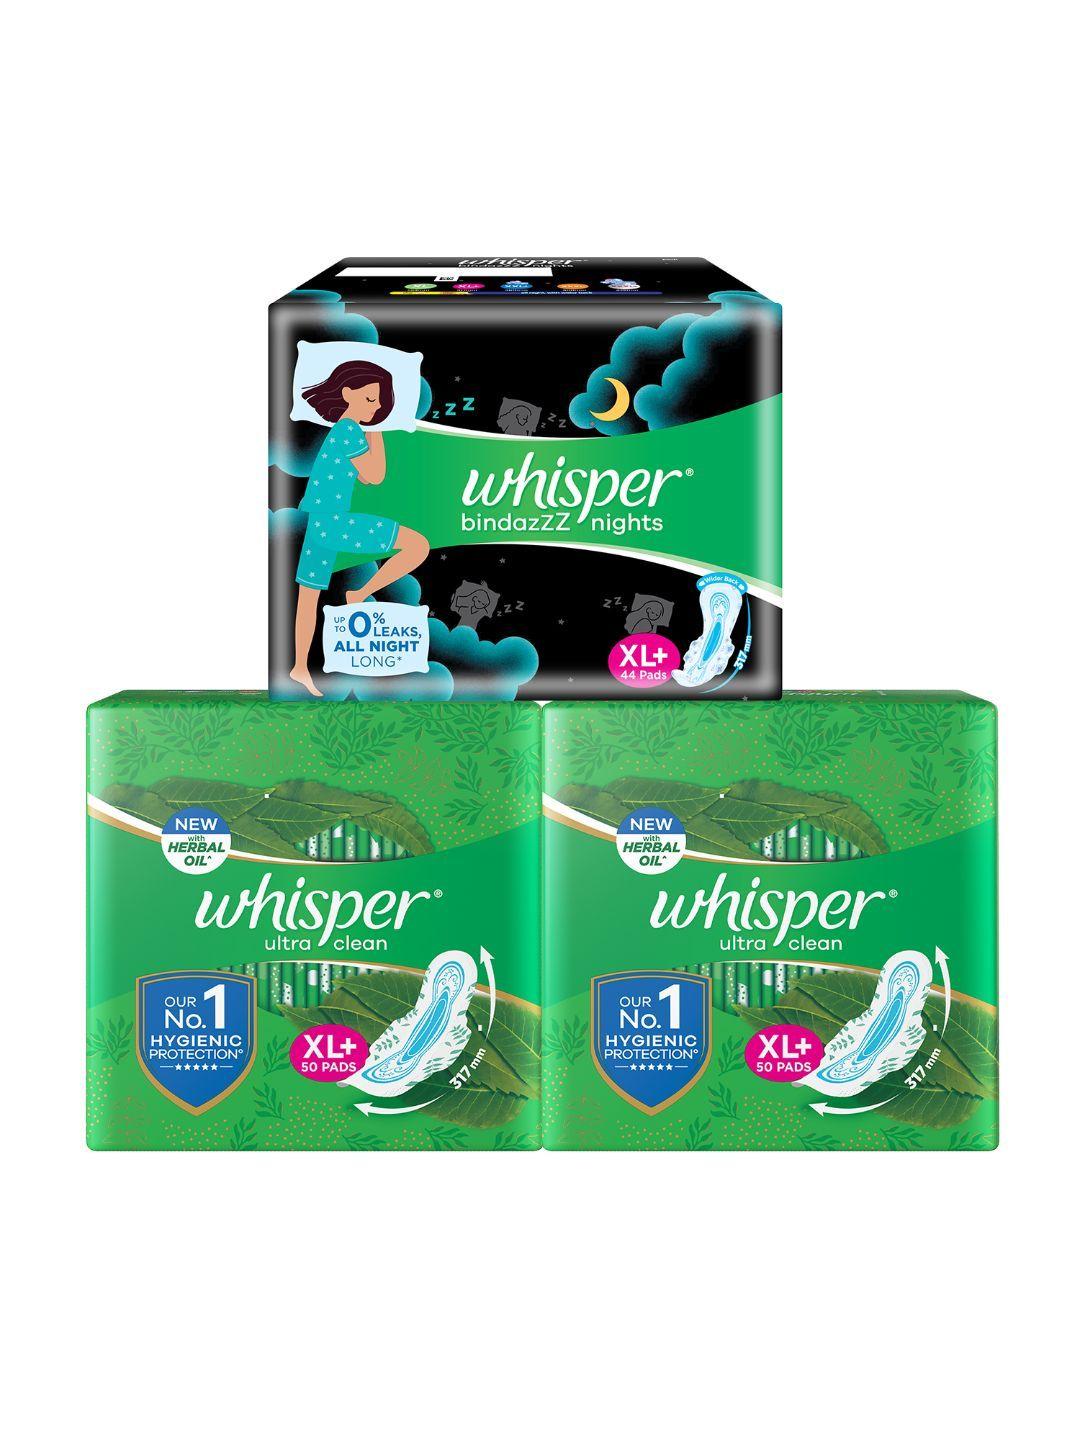 whisper set of 3 sanitary pads - ultra clean xl+ & bindazzz nights xl+